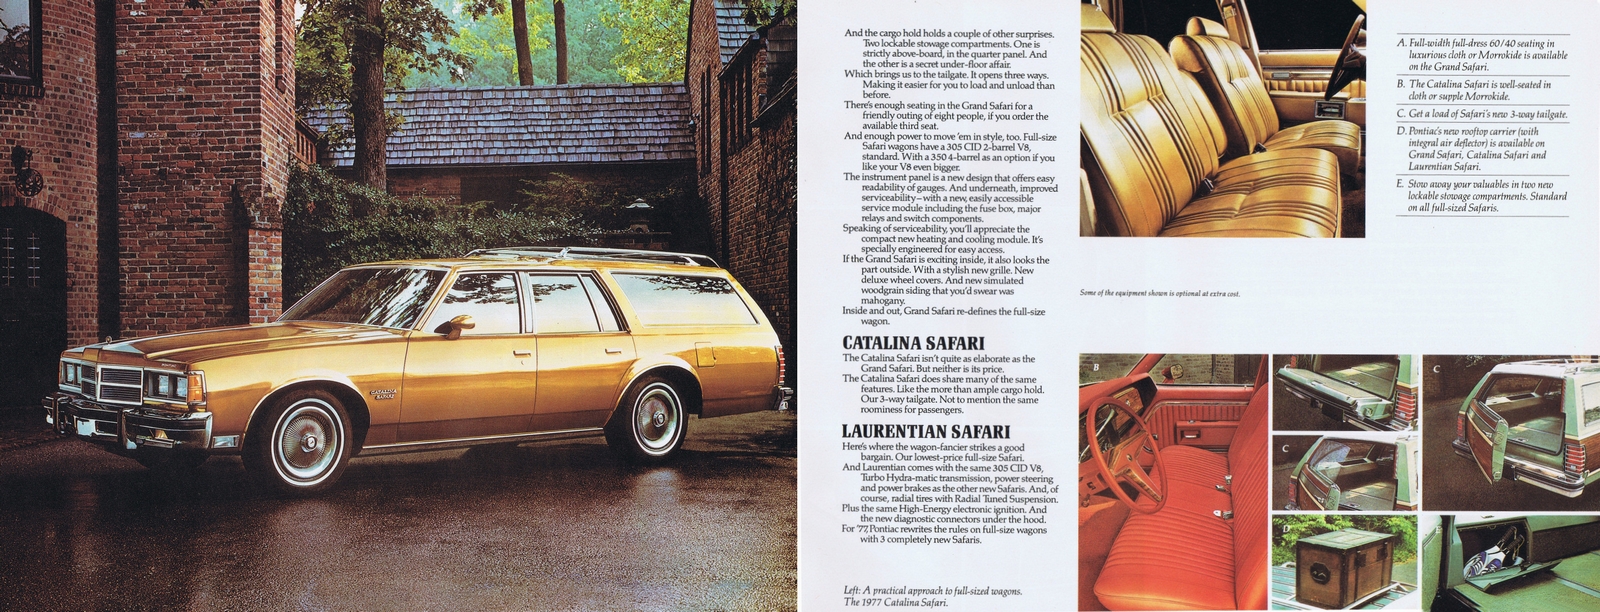 n_1977 Pontiac Full Size (Cdn)-12-13.jpg